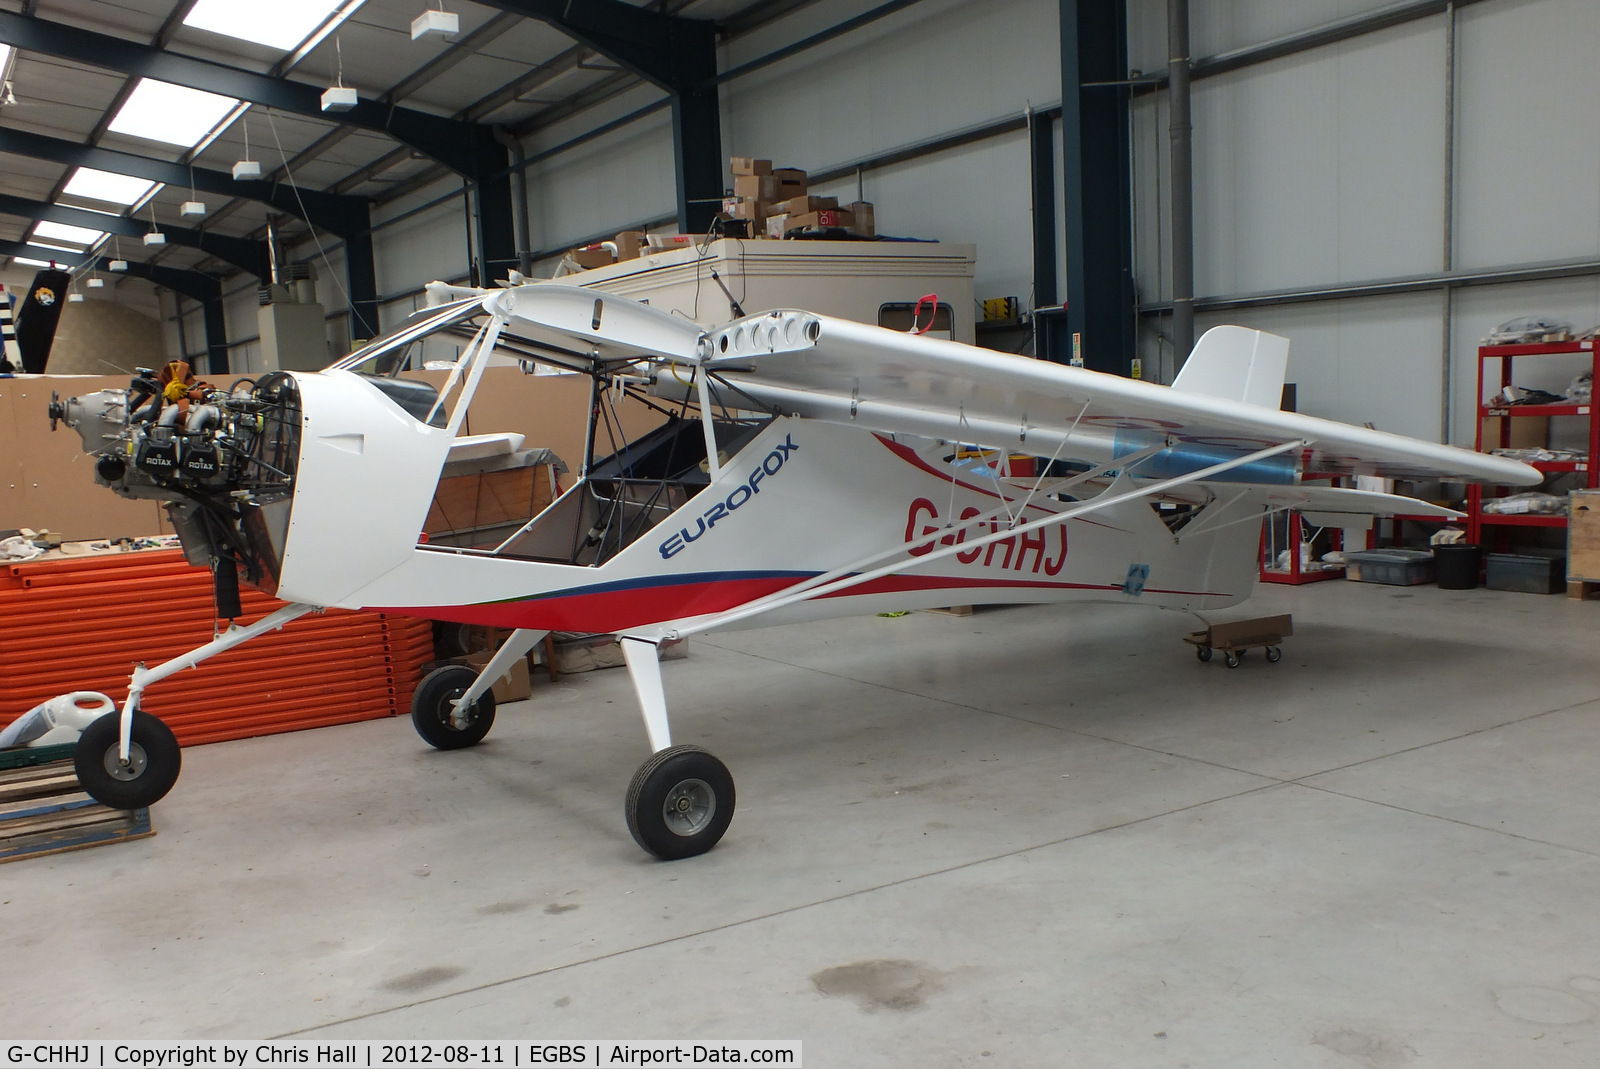 G-CHHJ, 2012 Aeropro Eurofox 912(1) C/N BMAA/HB/625, at Shobdon Airfield, Herefordshire